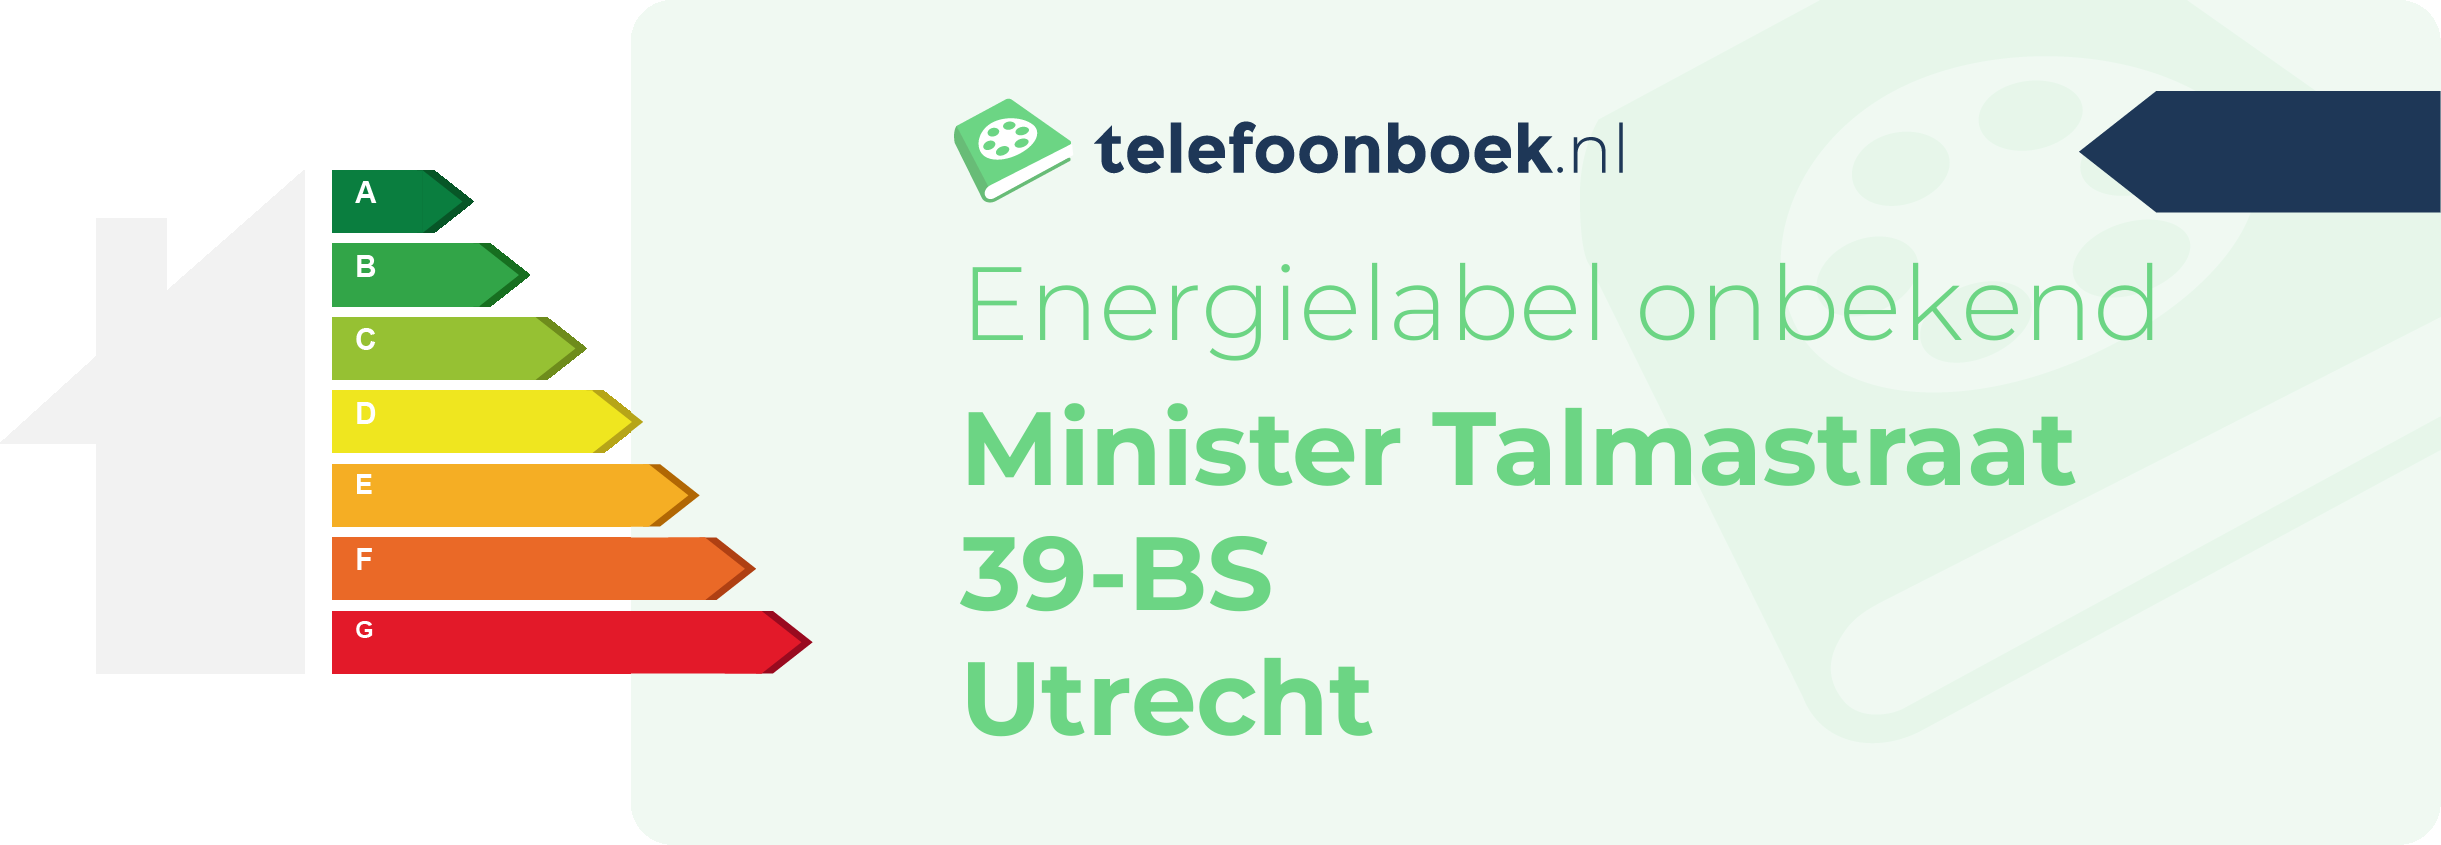 Energielabel Minister Talmastraat 39-BS Utrecht